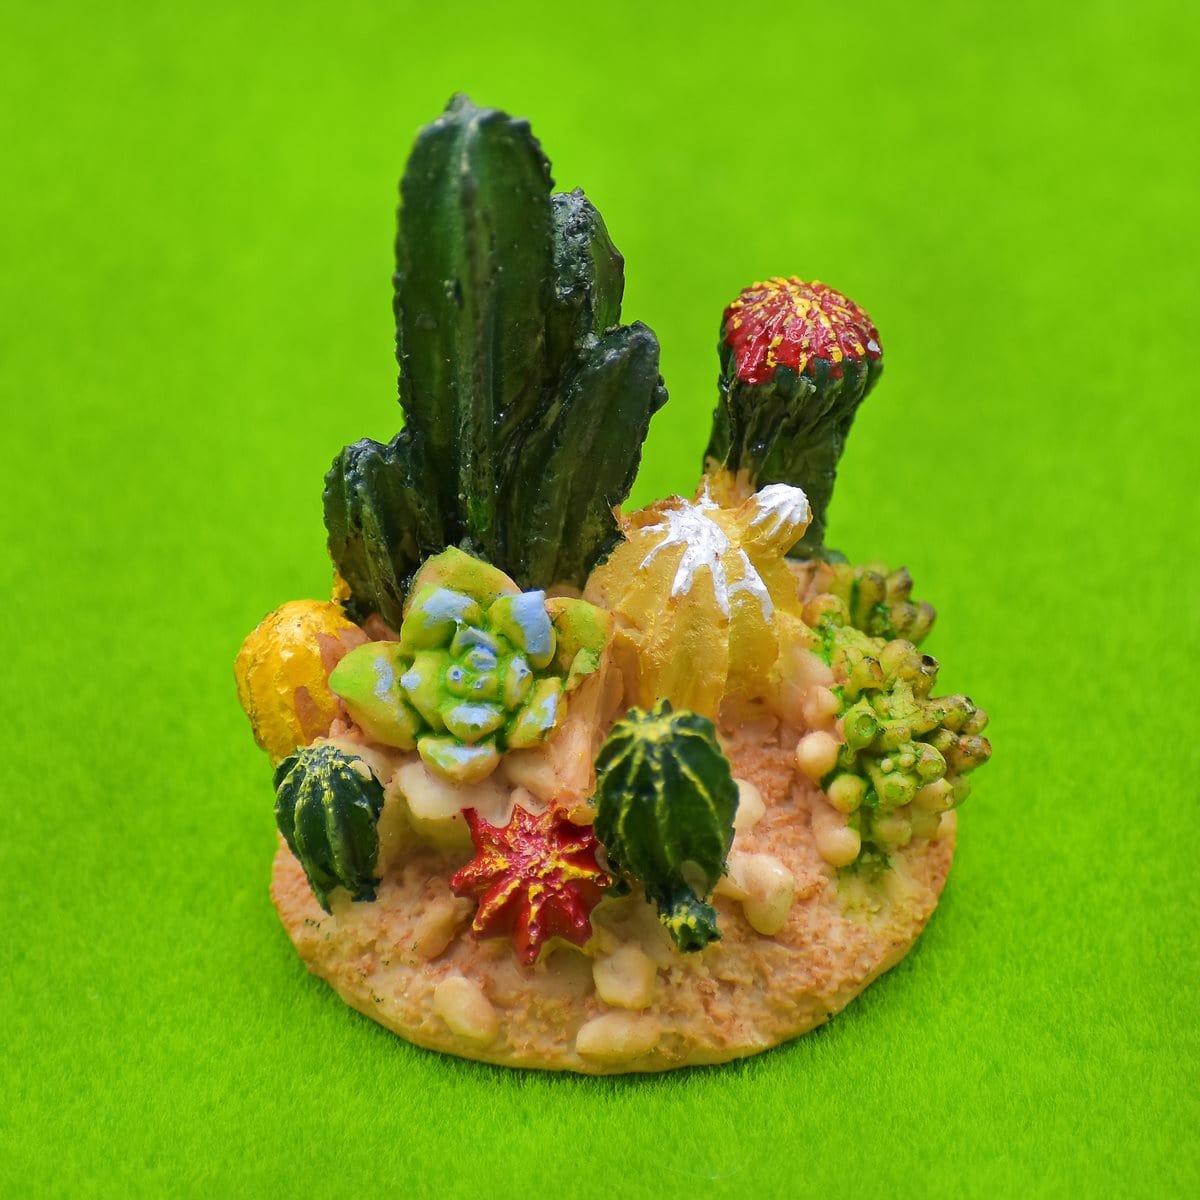 jags-mumbai Miniature Cactus Plant Miniature Model